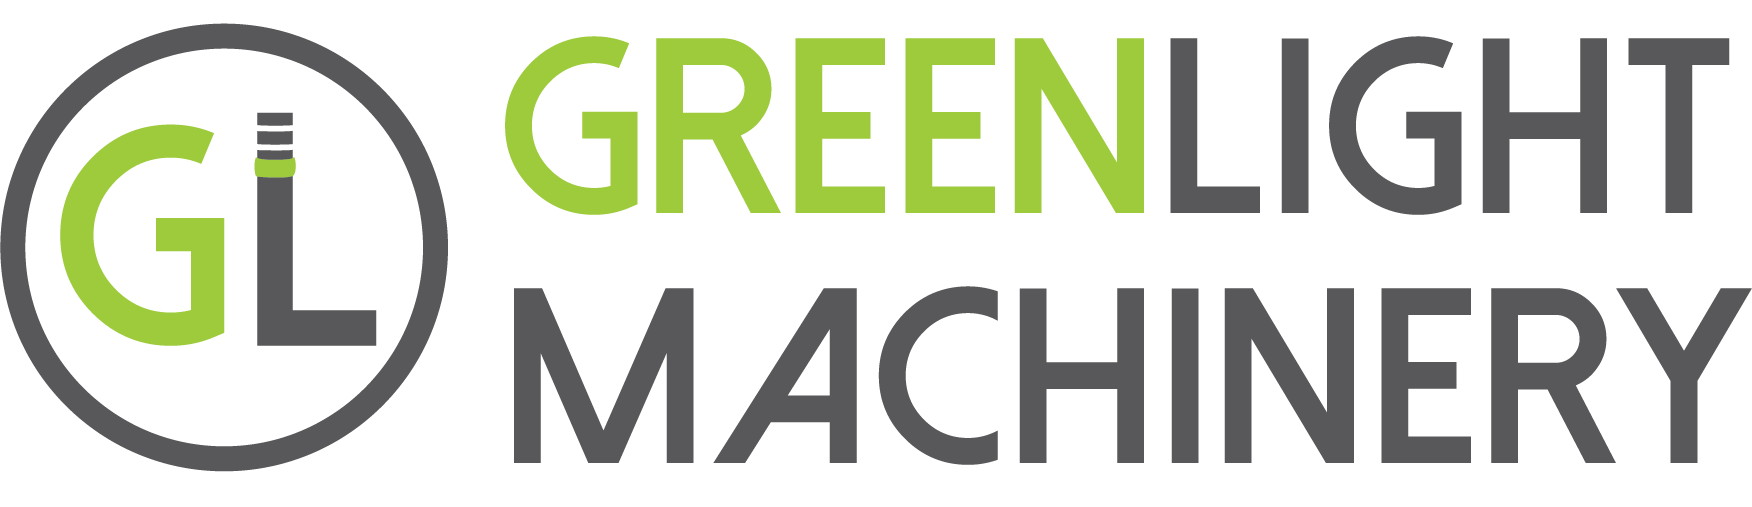 Green Light Machinery